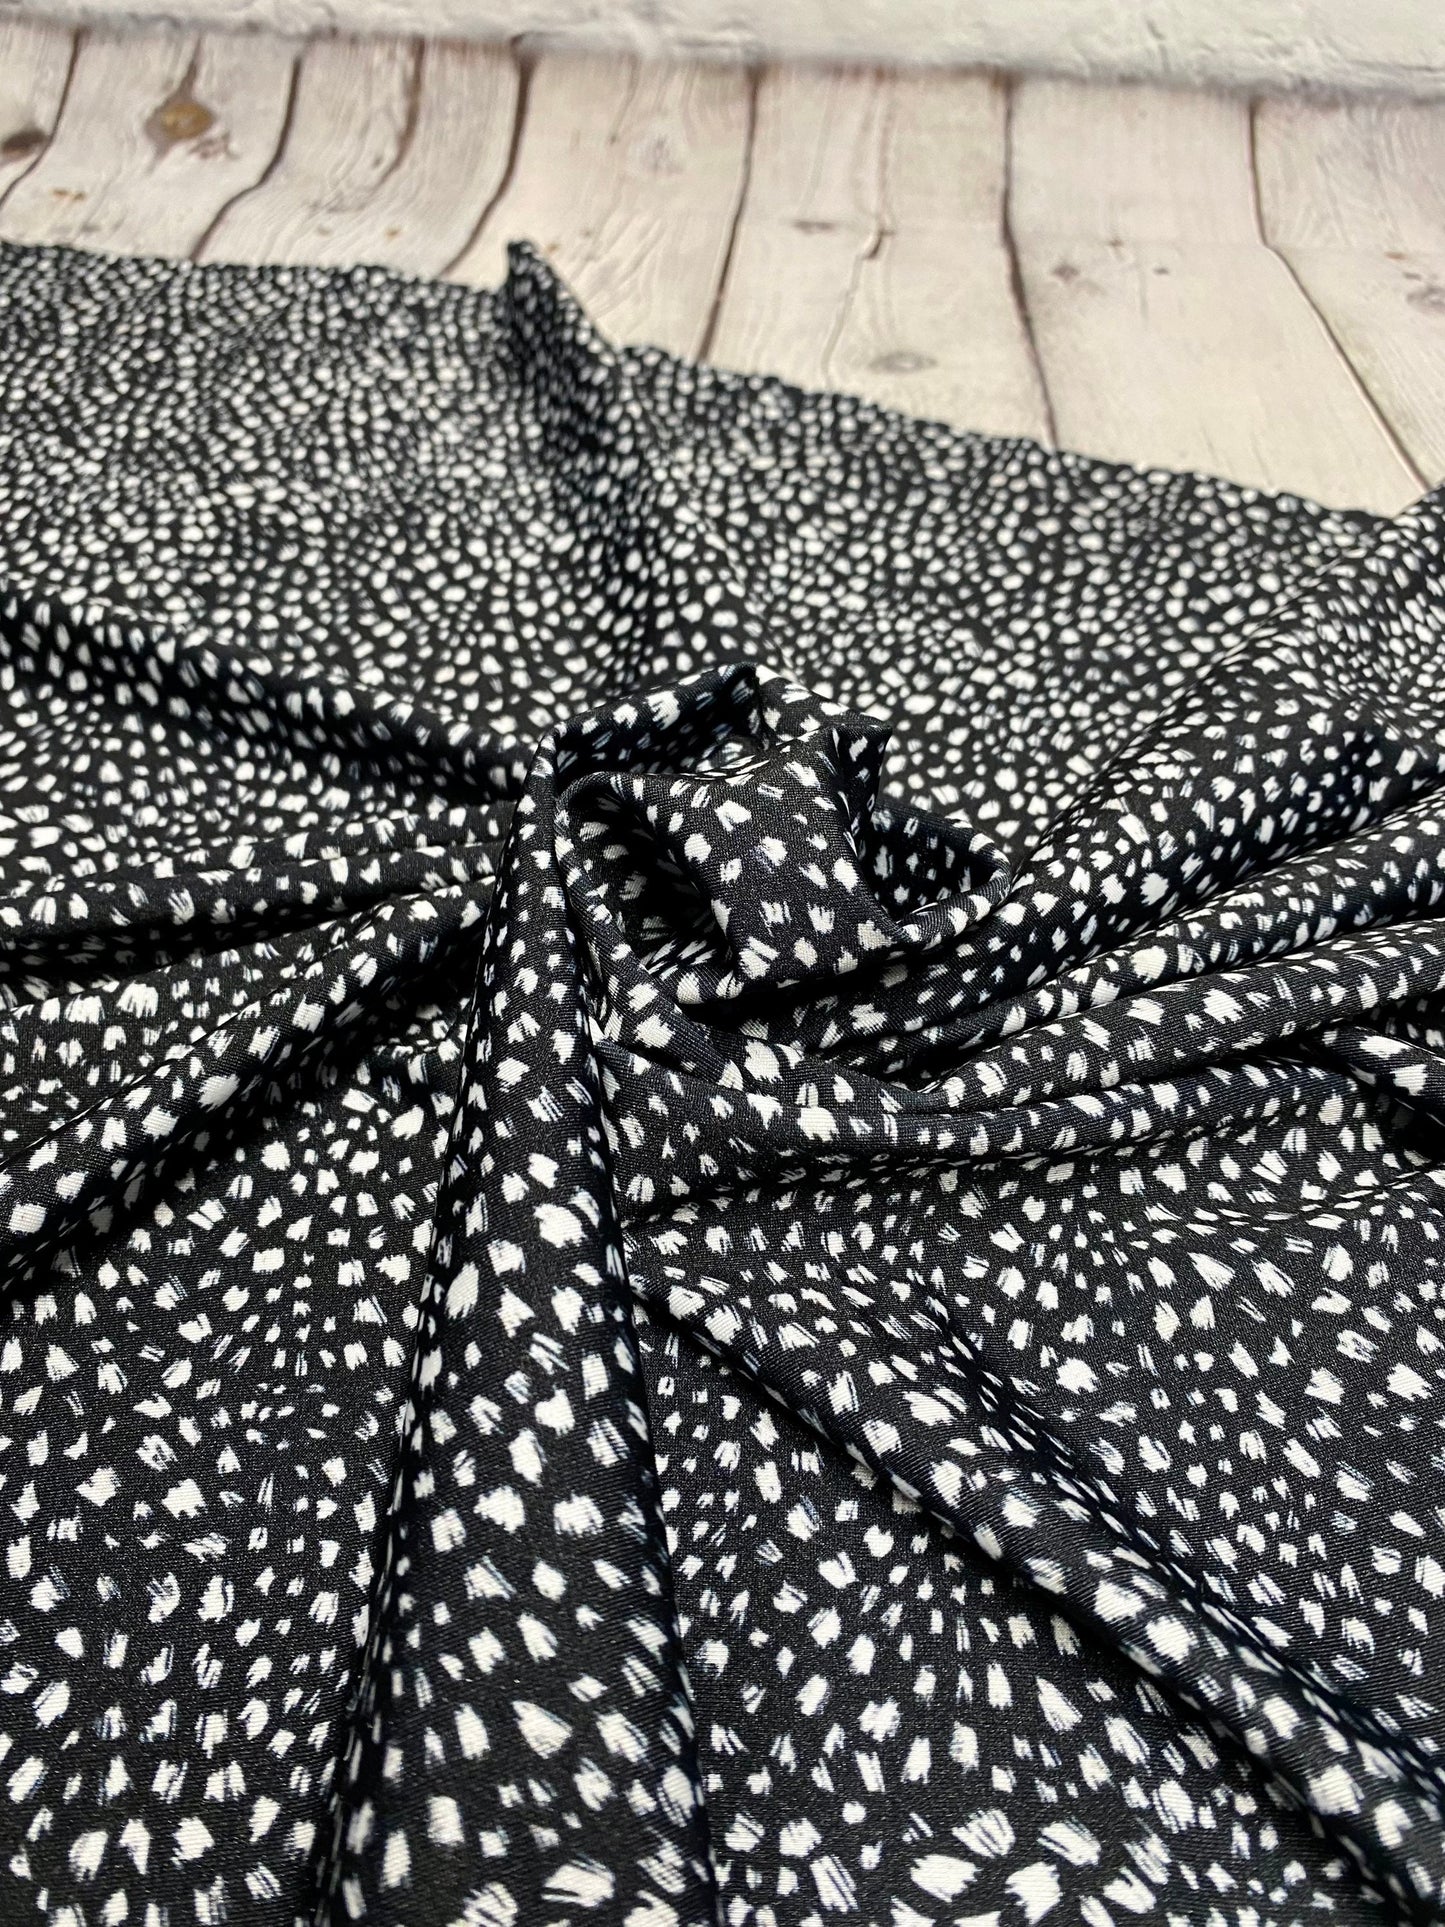 4 Way Stretch Assorted Print Nylon Spandex Fabric By The Yard Tricot Swim Wear Bikini Active Wear Black White Dot Print 280 GSM